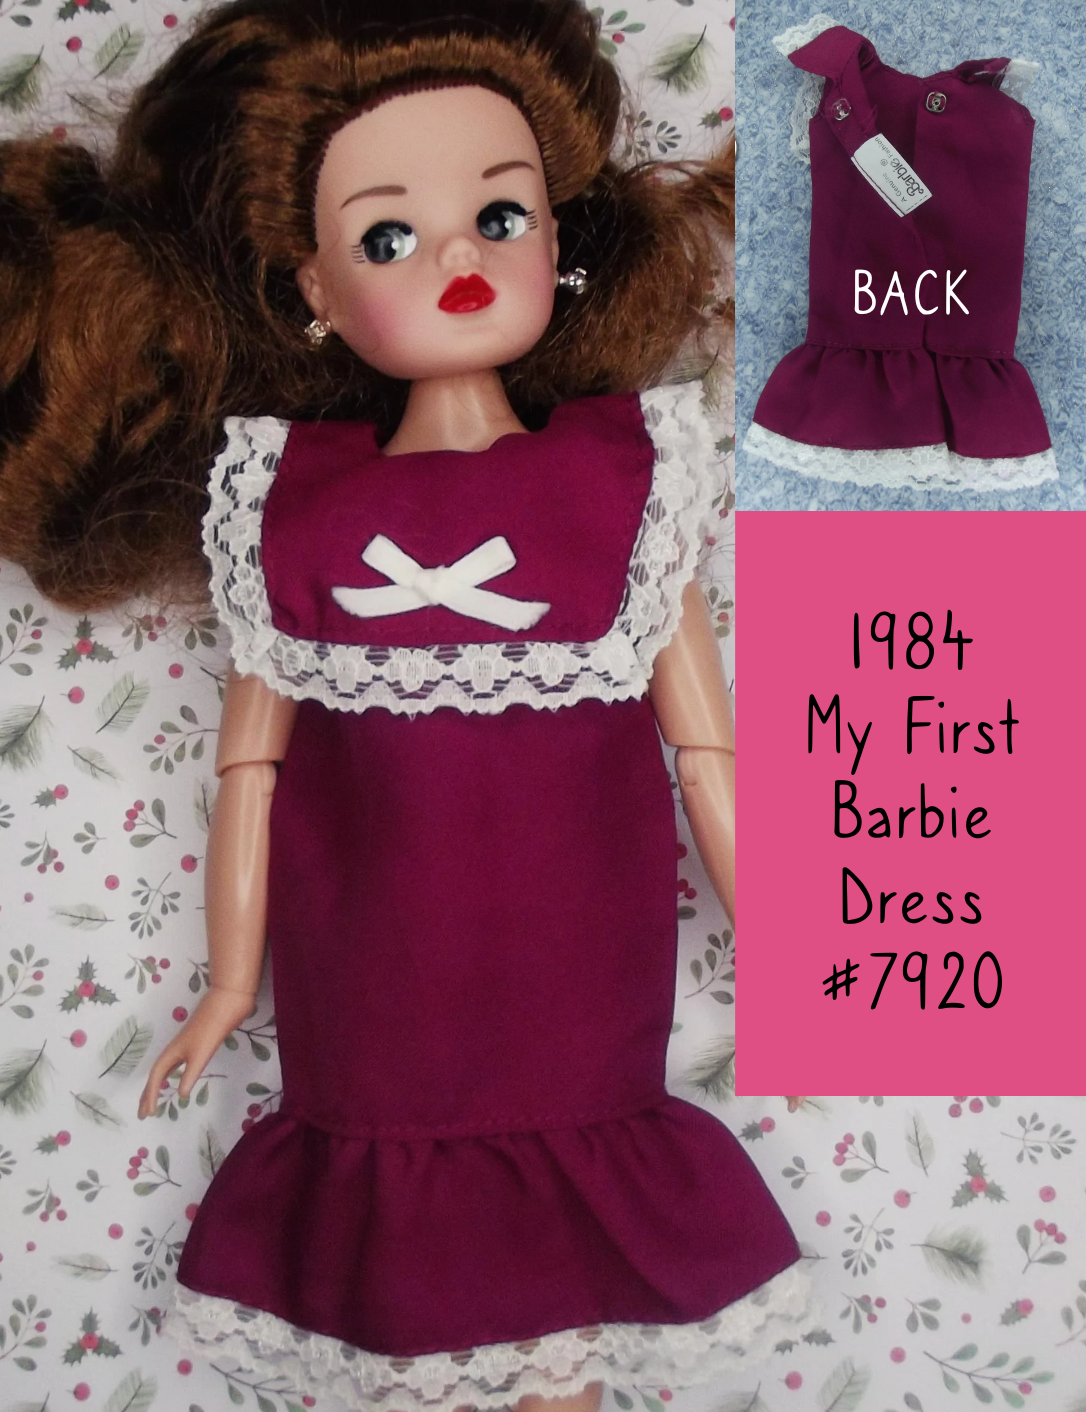 1984 My First Fashion Barbie Dress #7920